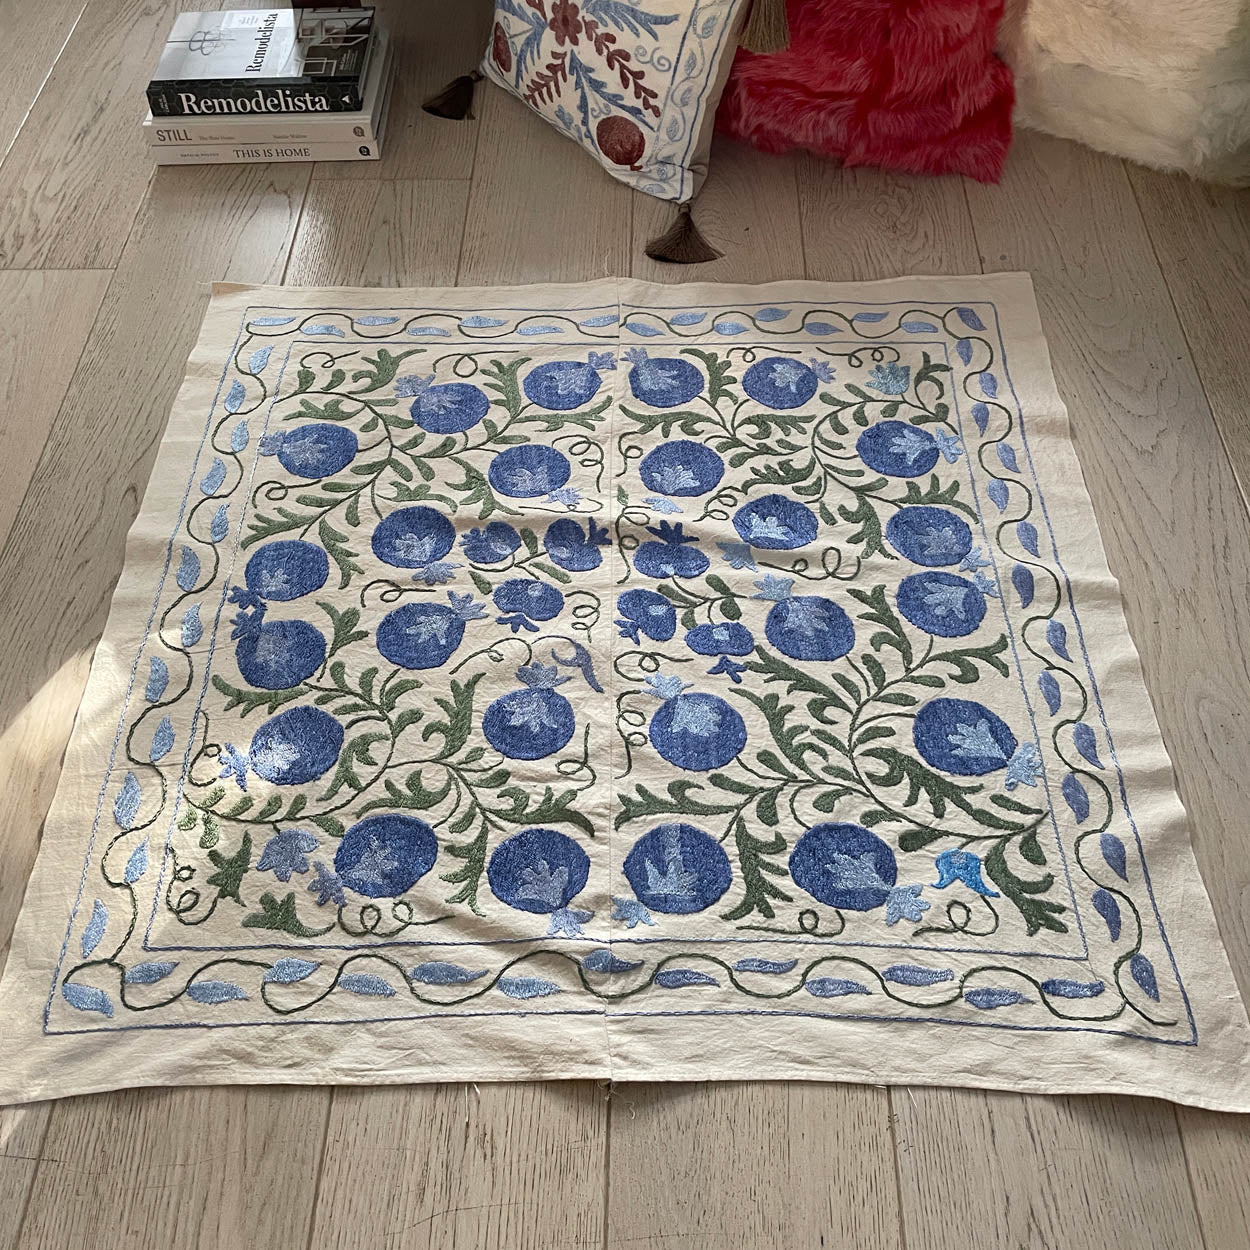 Uzbeki Suzani Hand Embroidered Textile Wall Hanging | Home Décor | Runner | 97cm x 94cm SUZ220518016 - Wildash London